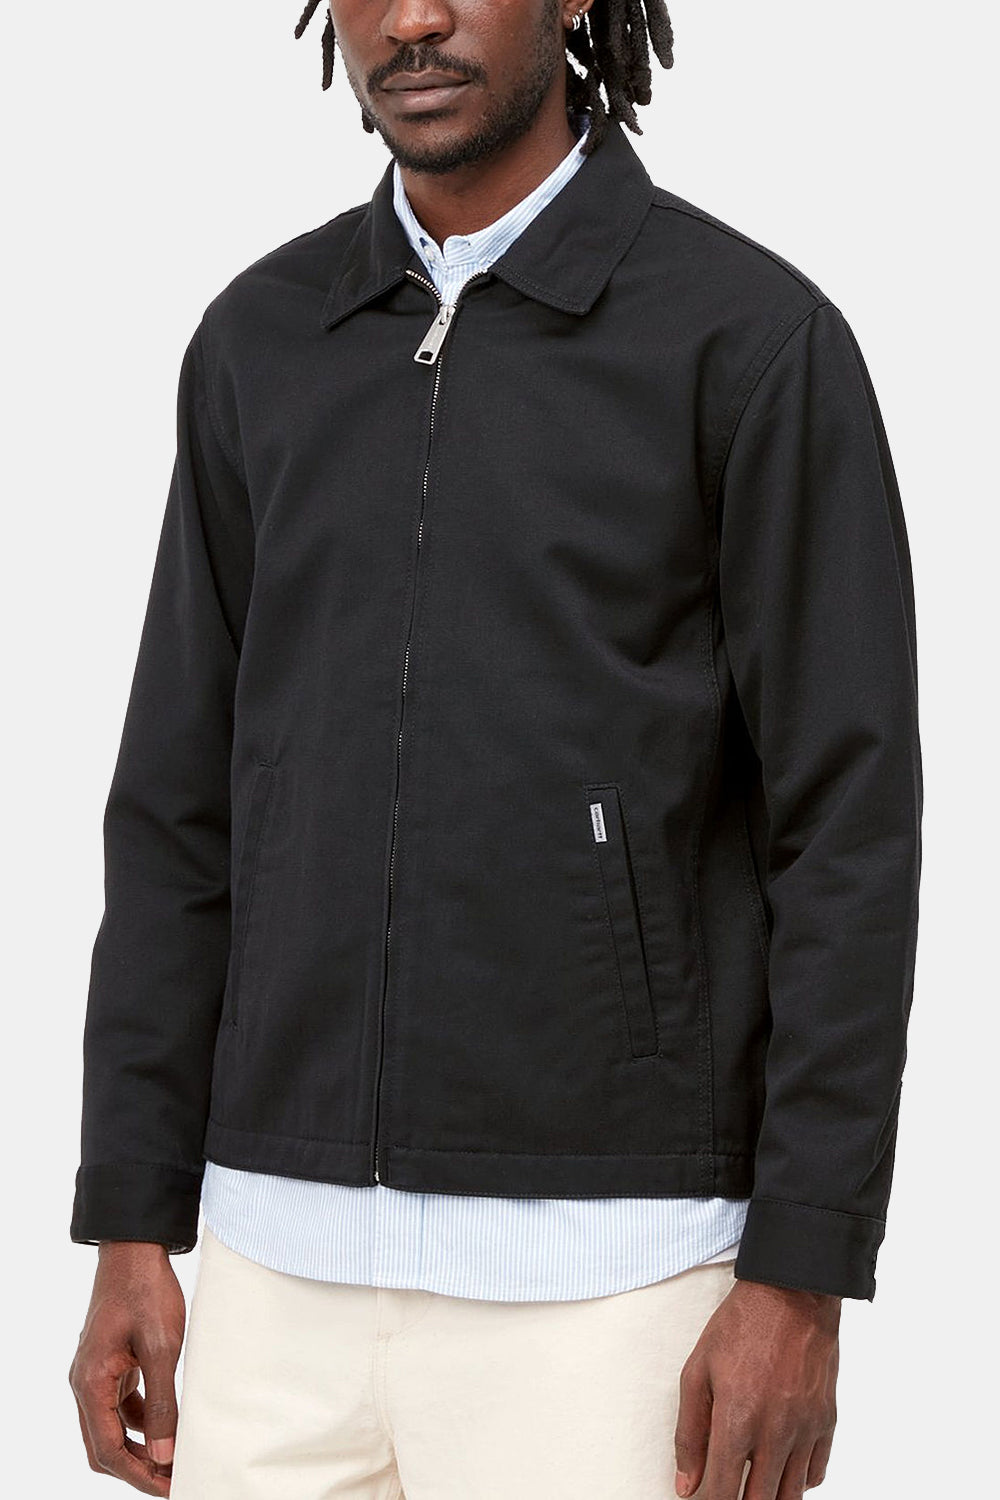 Carhartt WIP Modular Jacket (Black Rinsed)
